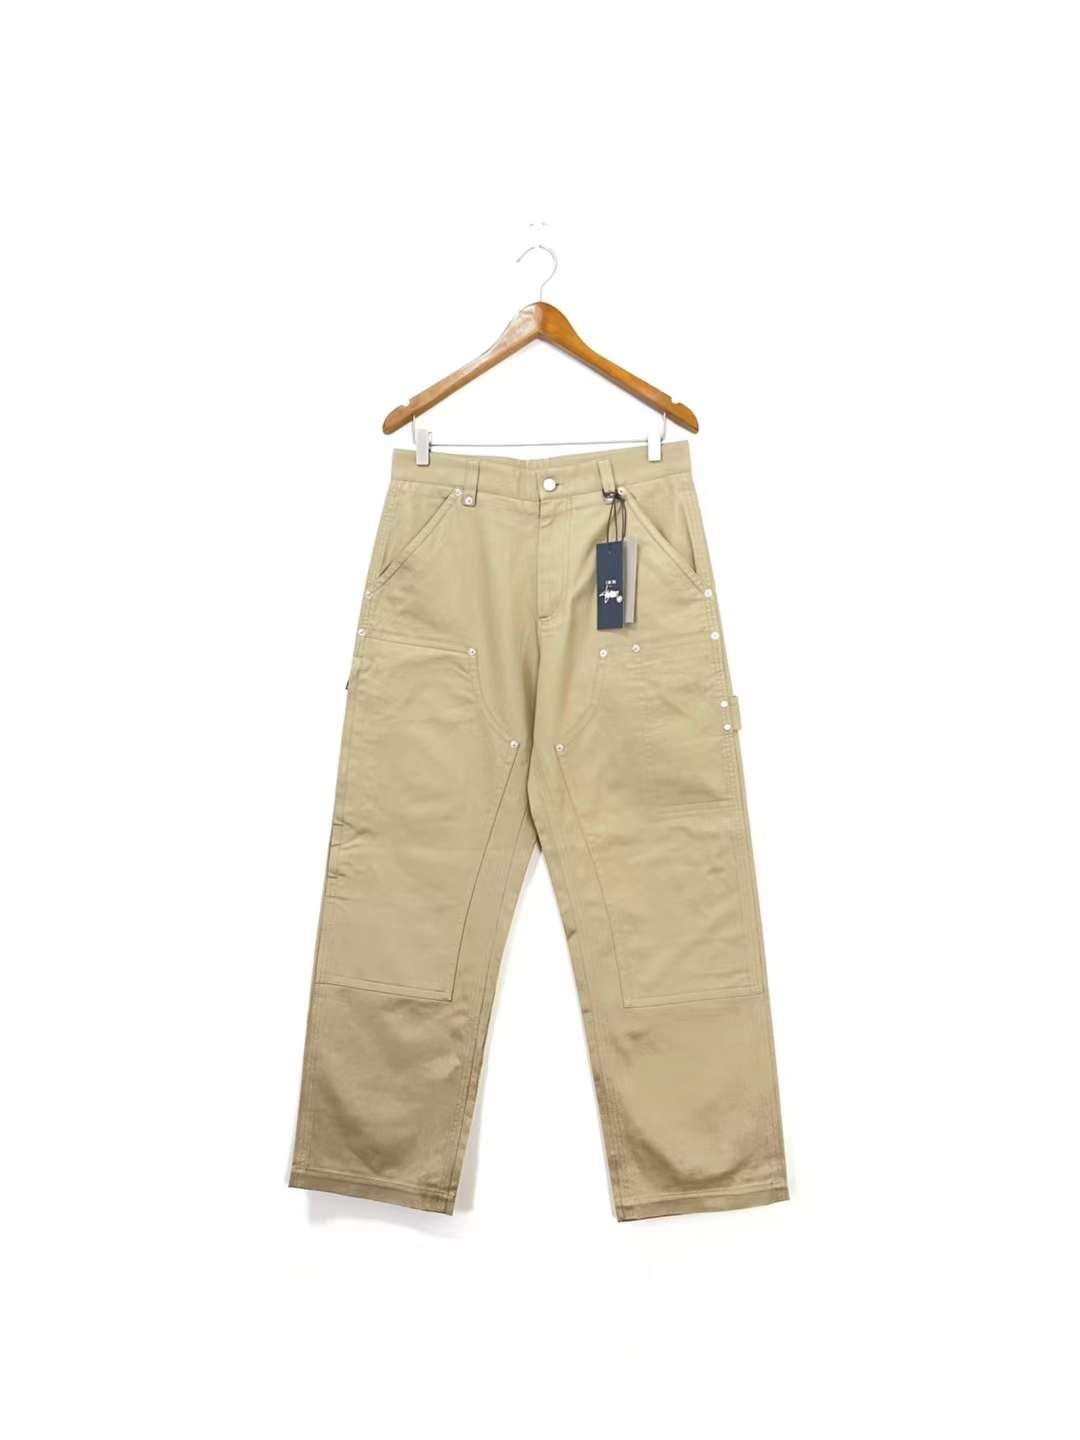 Khaki cargo pants with bee embroidery - 1